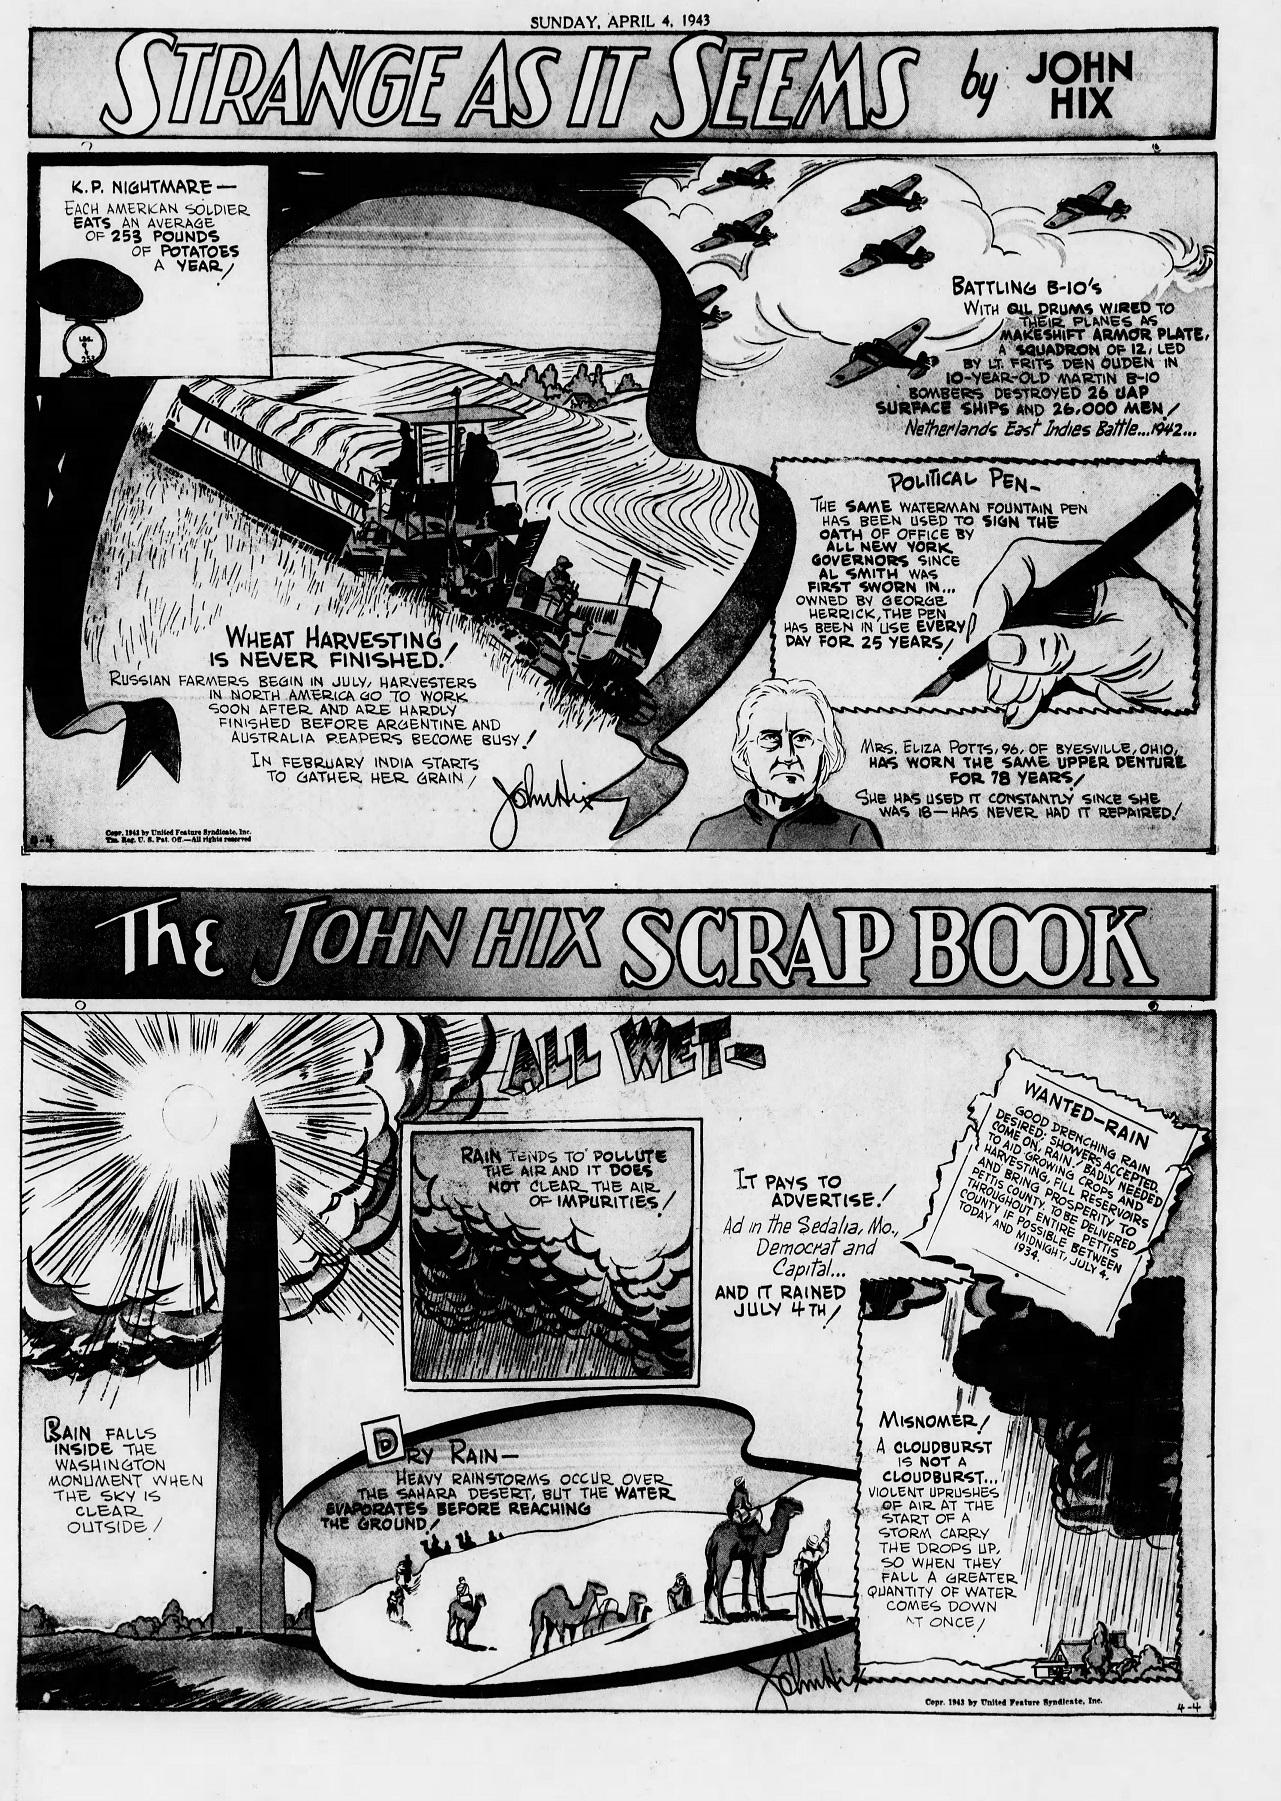 The_Brooklyn_Daily_Eagle_Sun__Apr_4__1943_(9).jpg